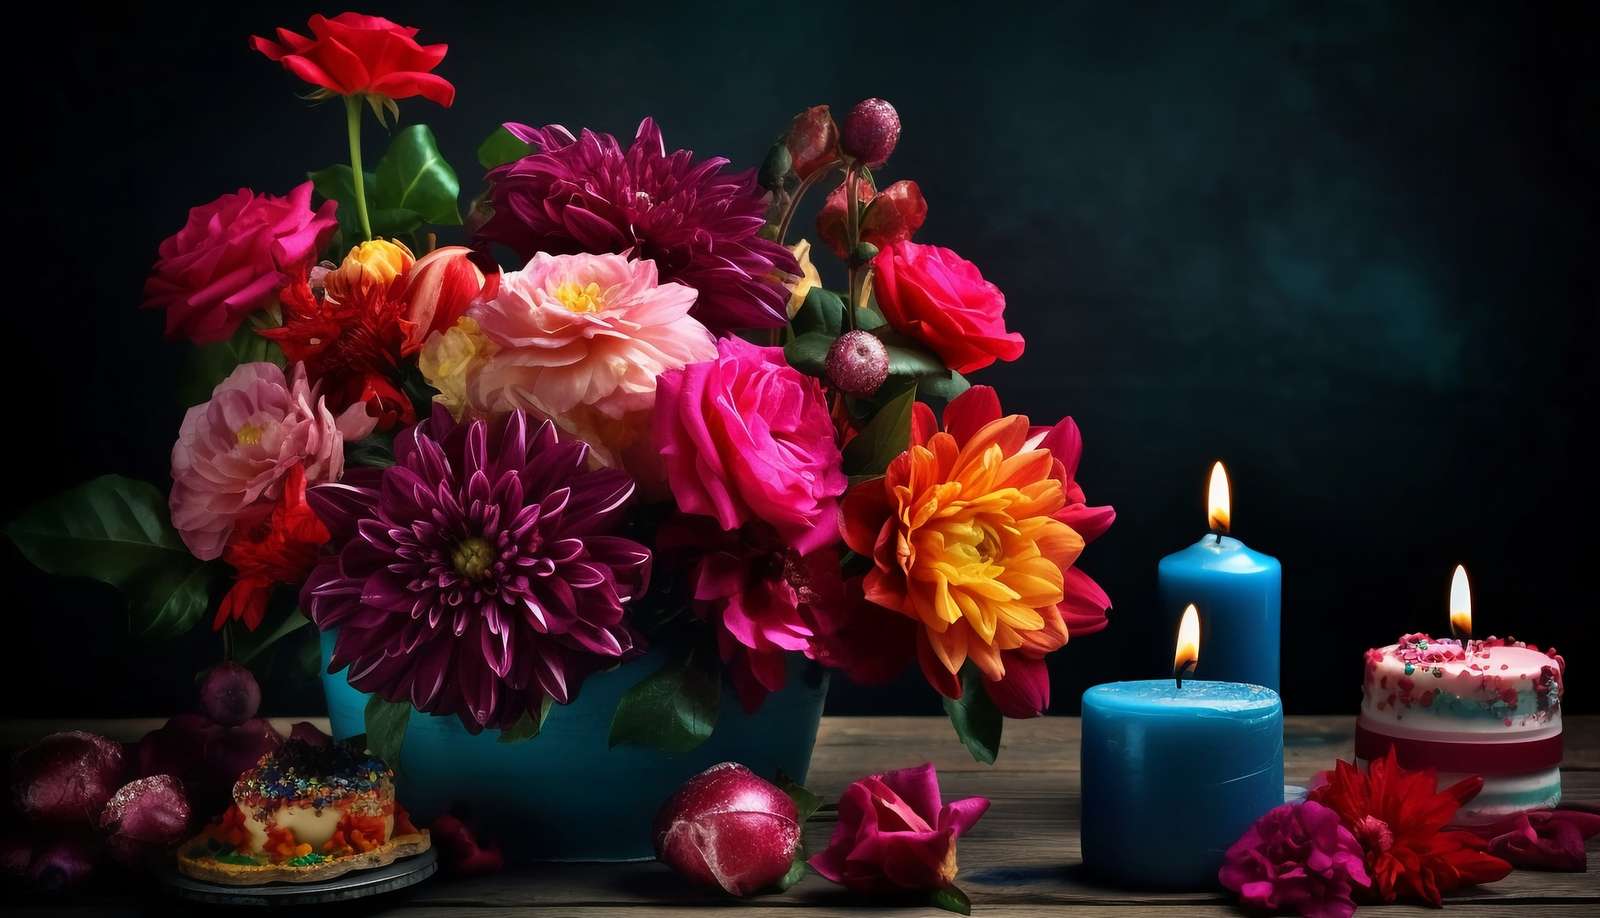 Свечи рядом с букетом ярких цветов онлайн-пазл